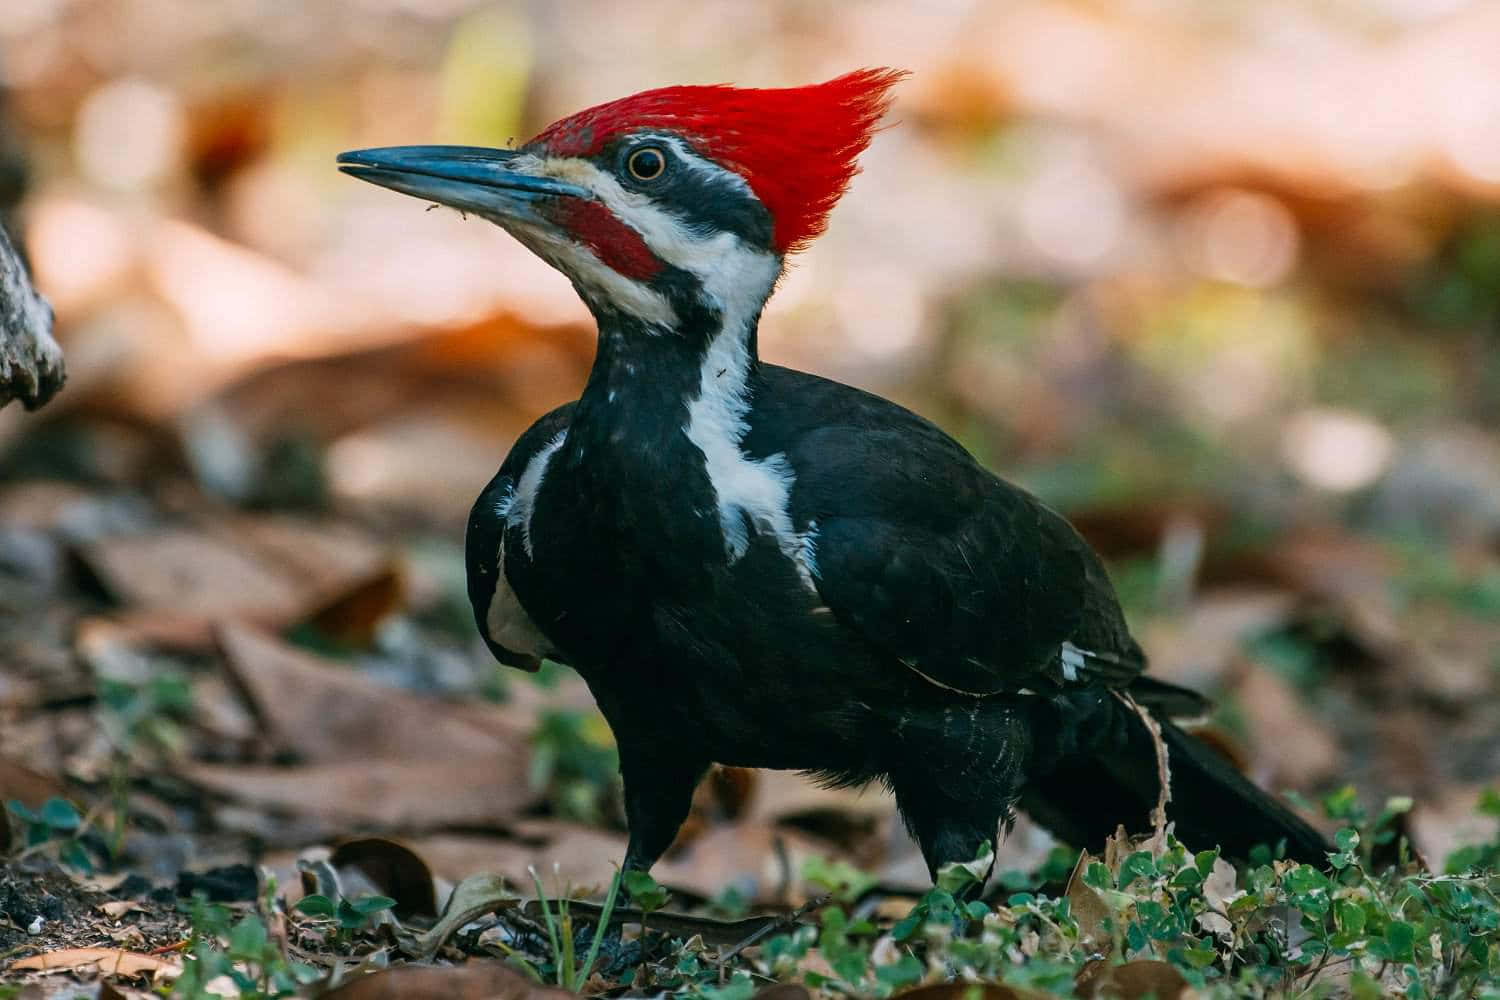 A closeup of a woodpecker on a tree branch